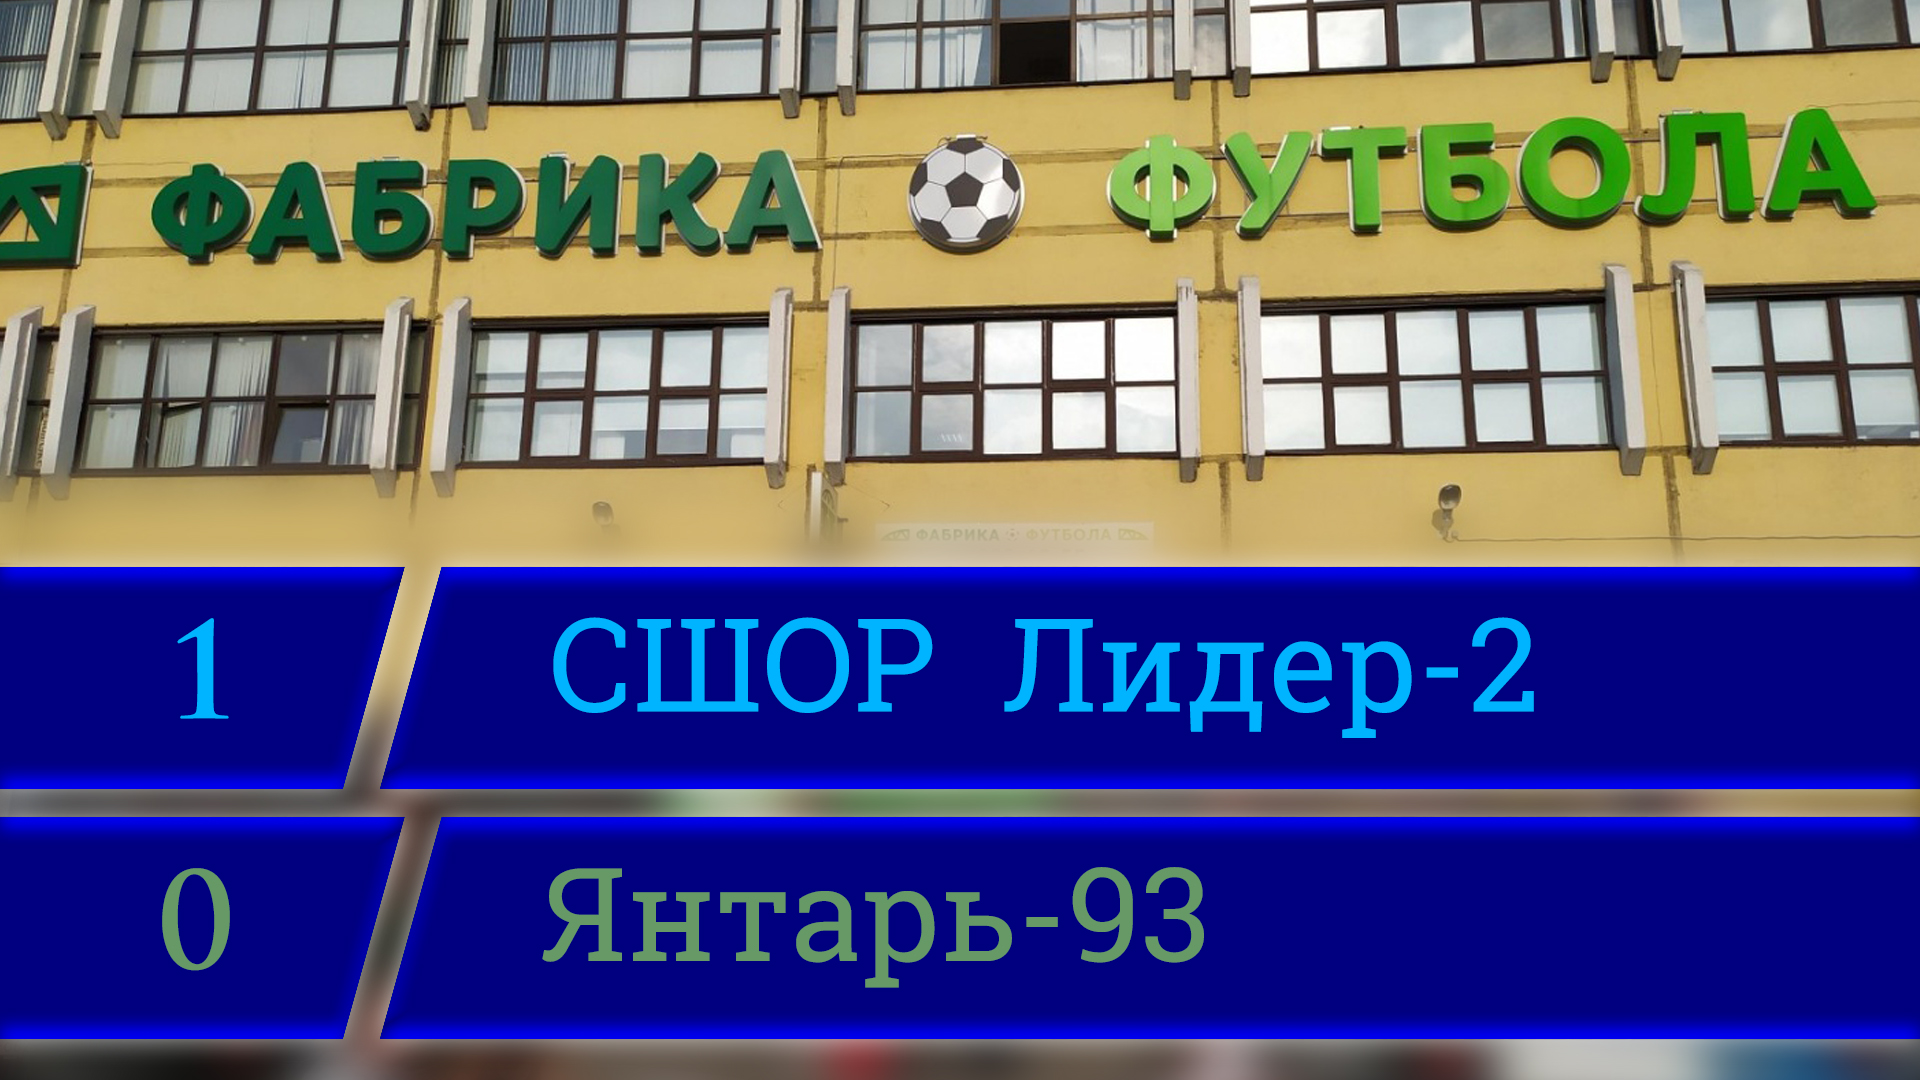 СШОР Лидер-2 - ФК Янтарь-93 (1:0), Турнир Sport Is Life, Фабрика Футбола, 07.03.2022